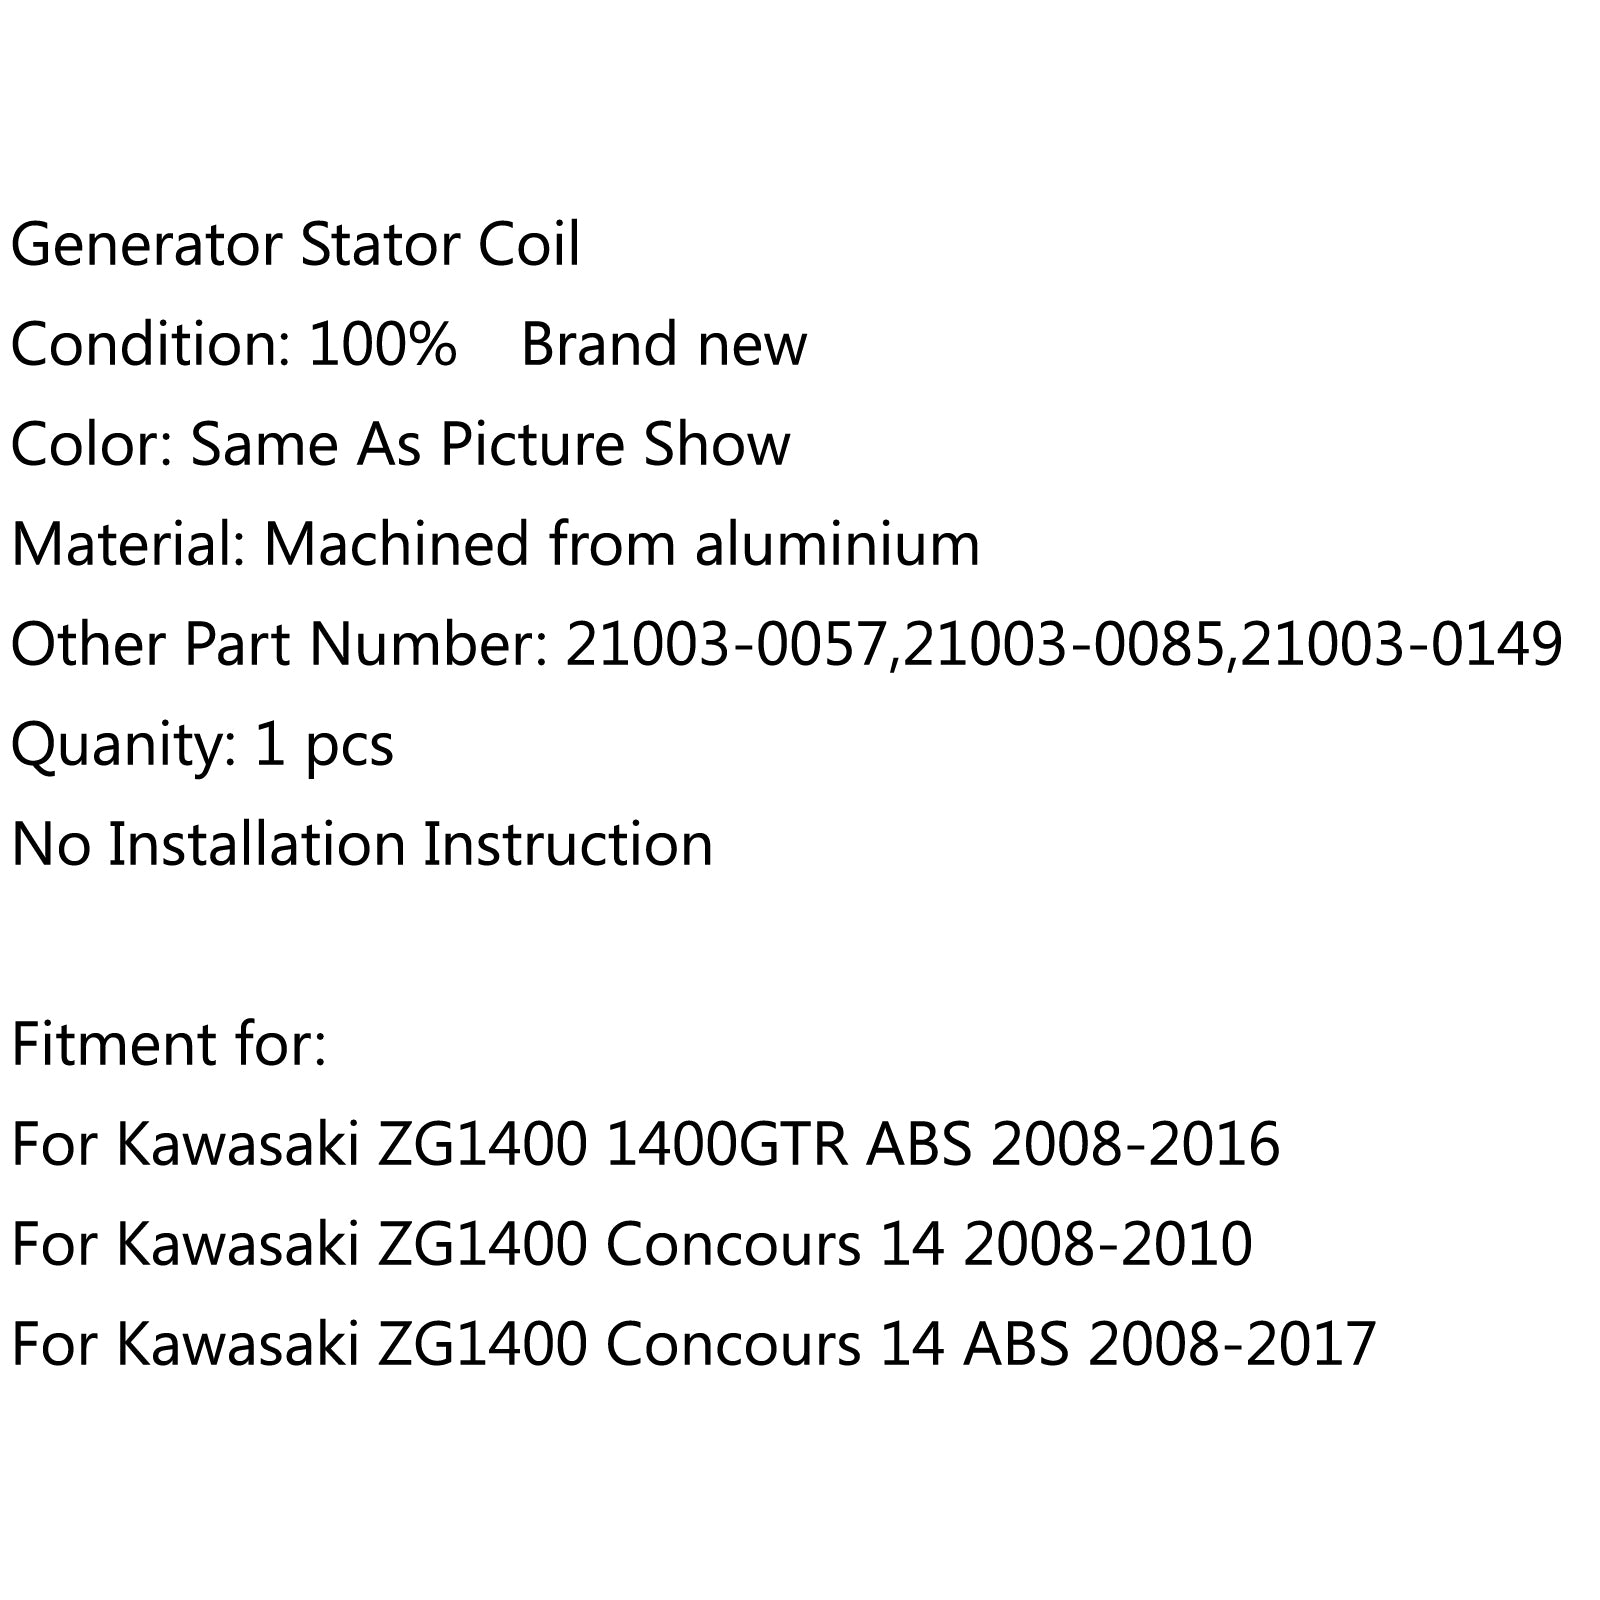 Bobina statore generatore per Kawasaki ZG1400 1400GTR ABS 08-16 Concours 14 08-10 tramite fedex